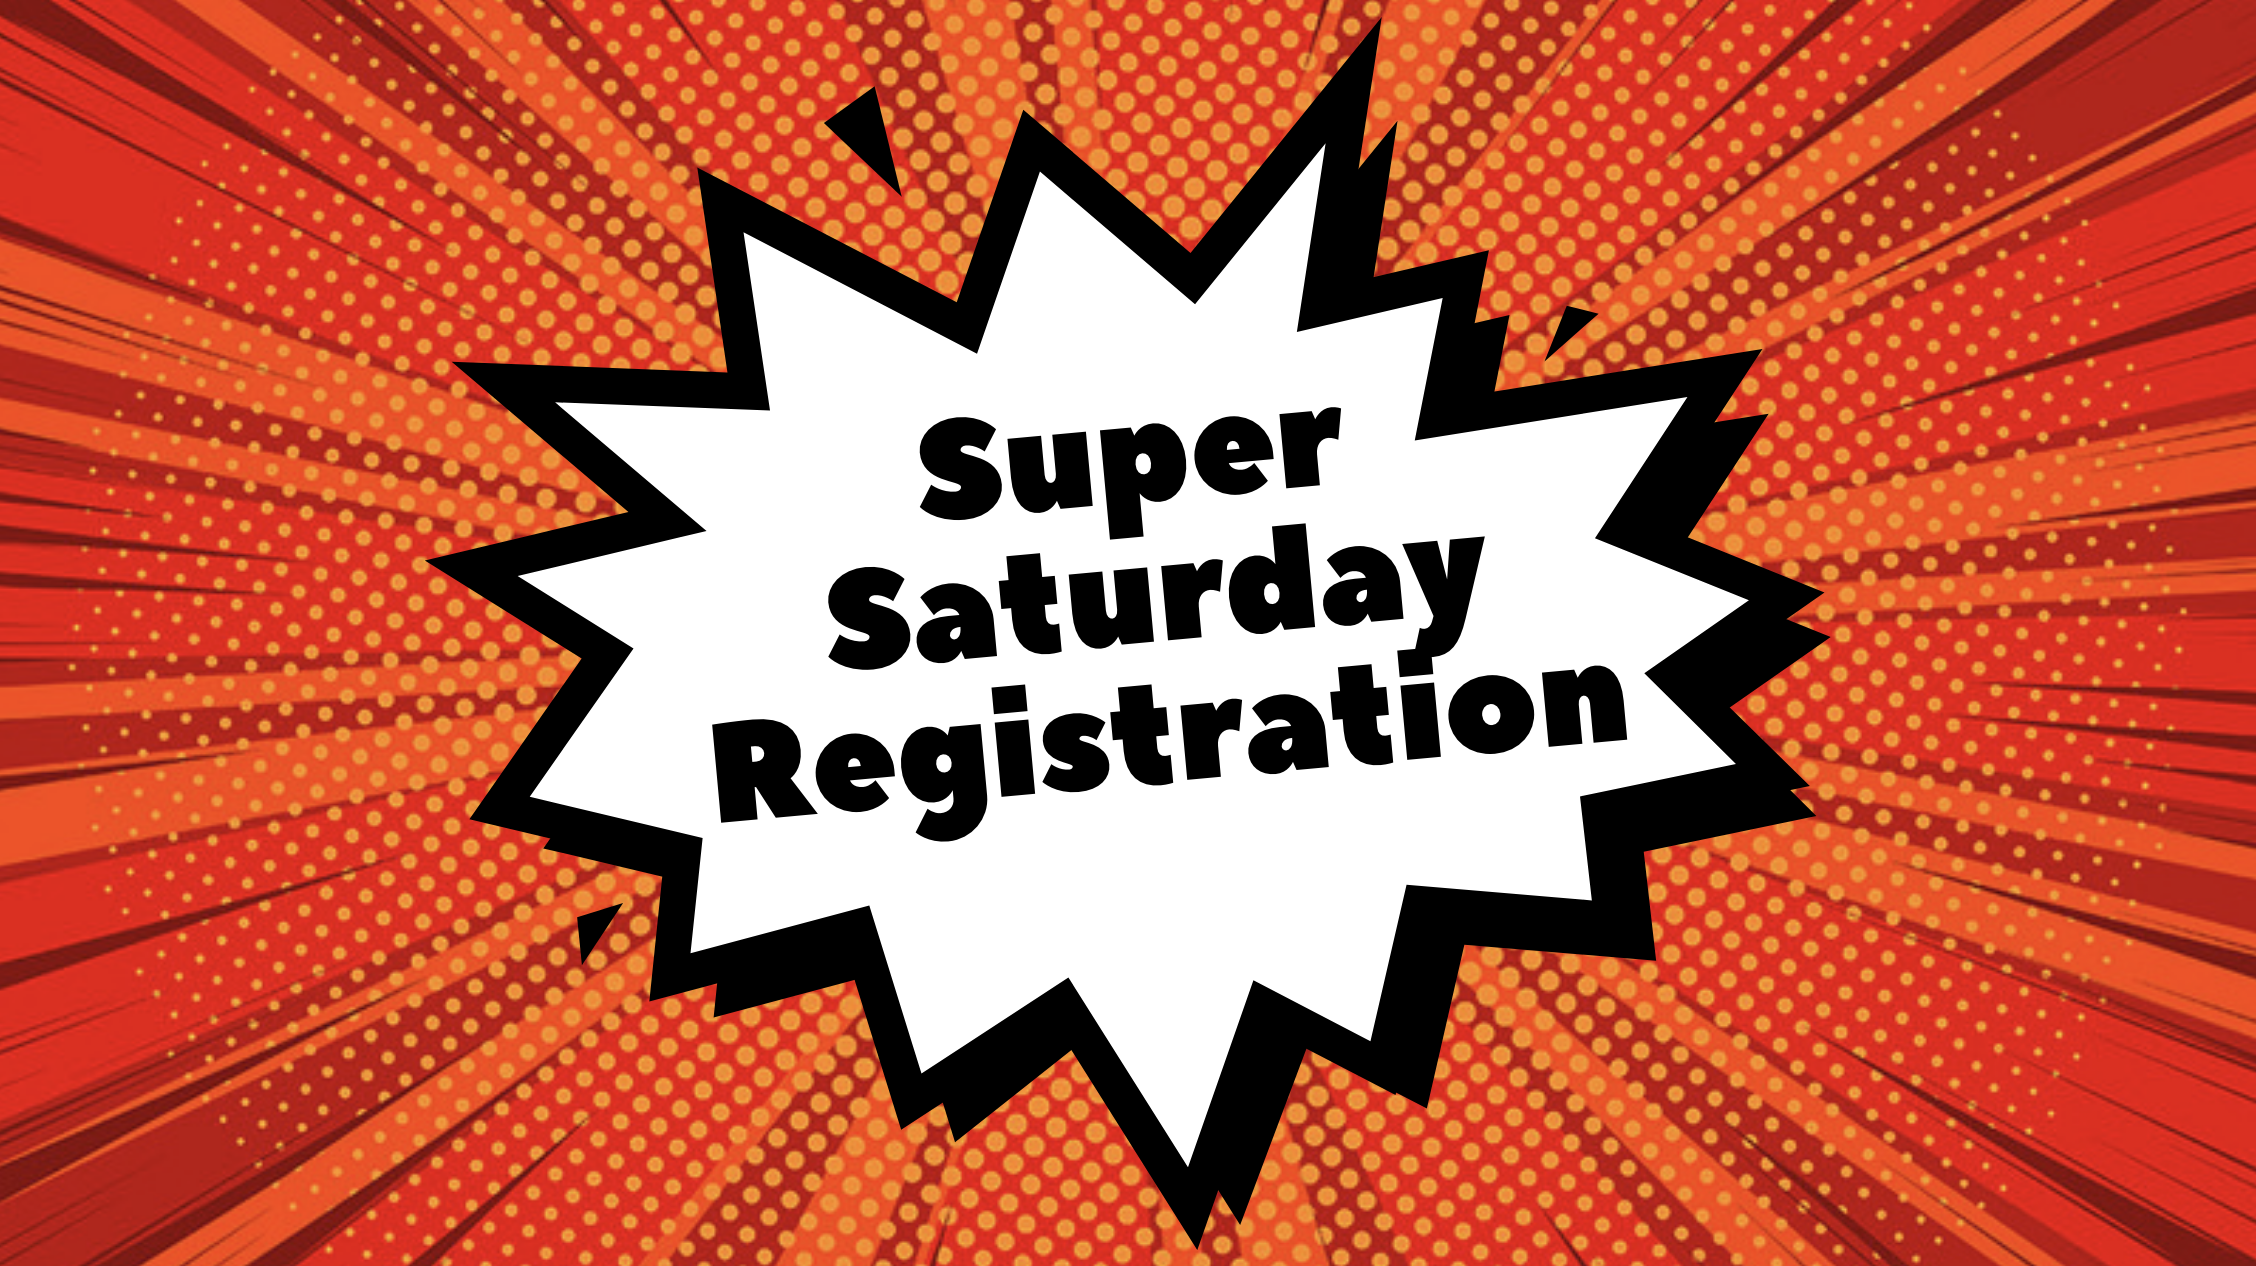 Super Saturday Registration August 10, 2019